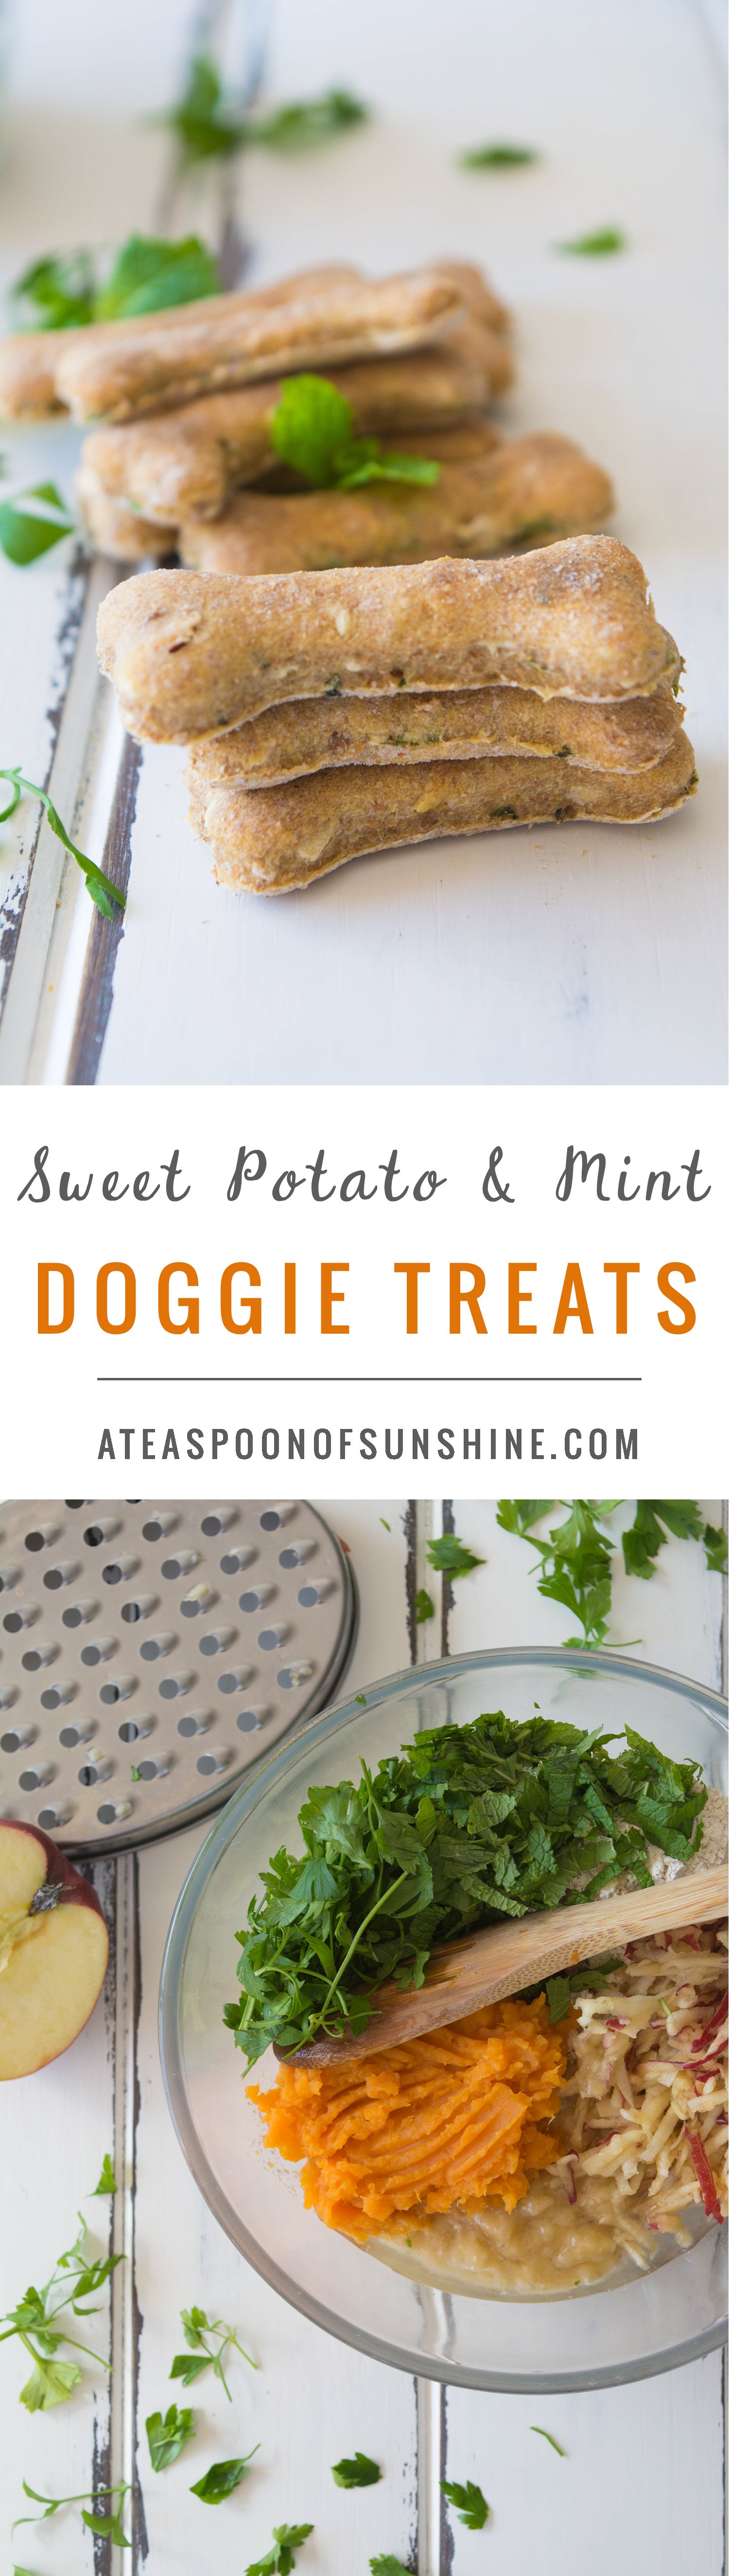 Sweet Potato & Mint Doggie Treats